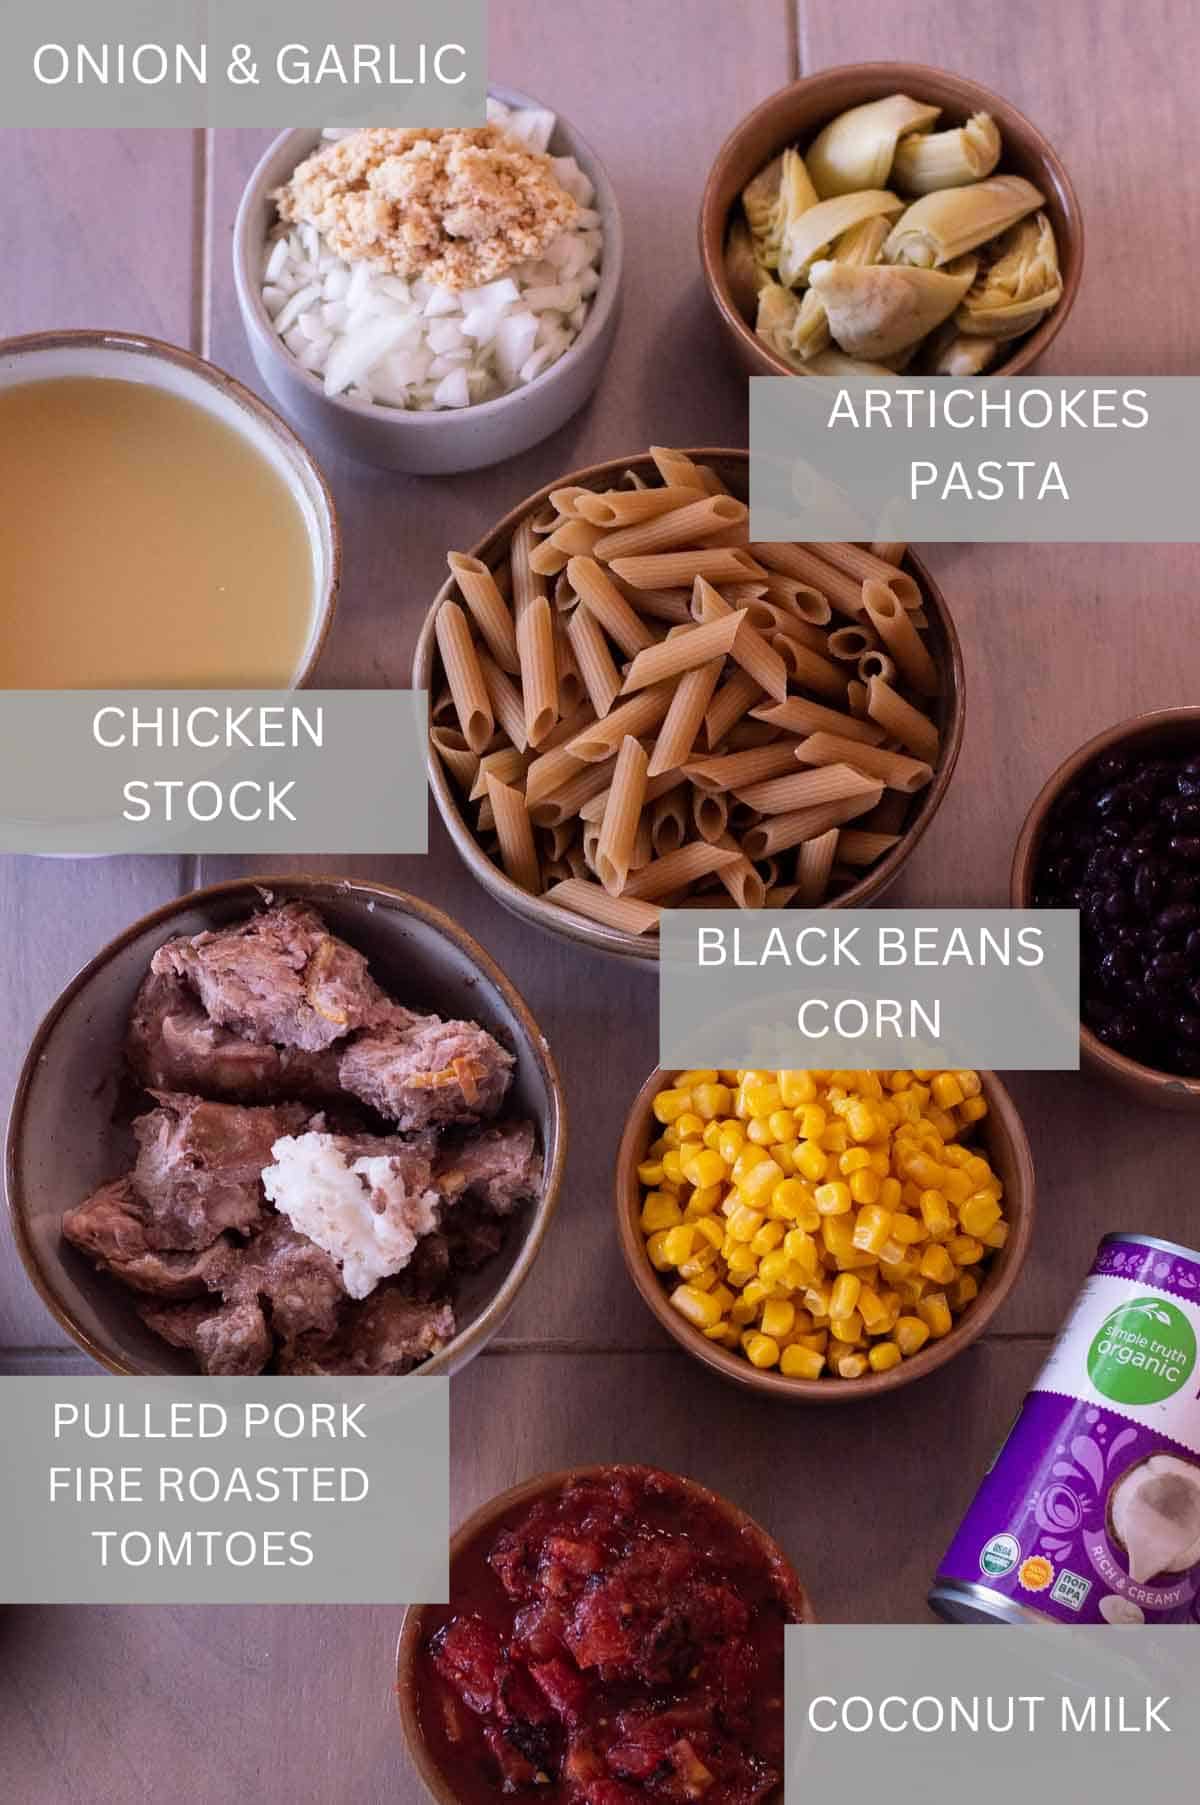 Pulled pork pasta ingredients